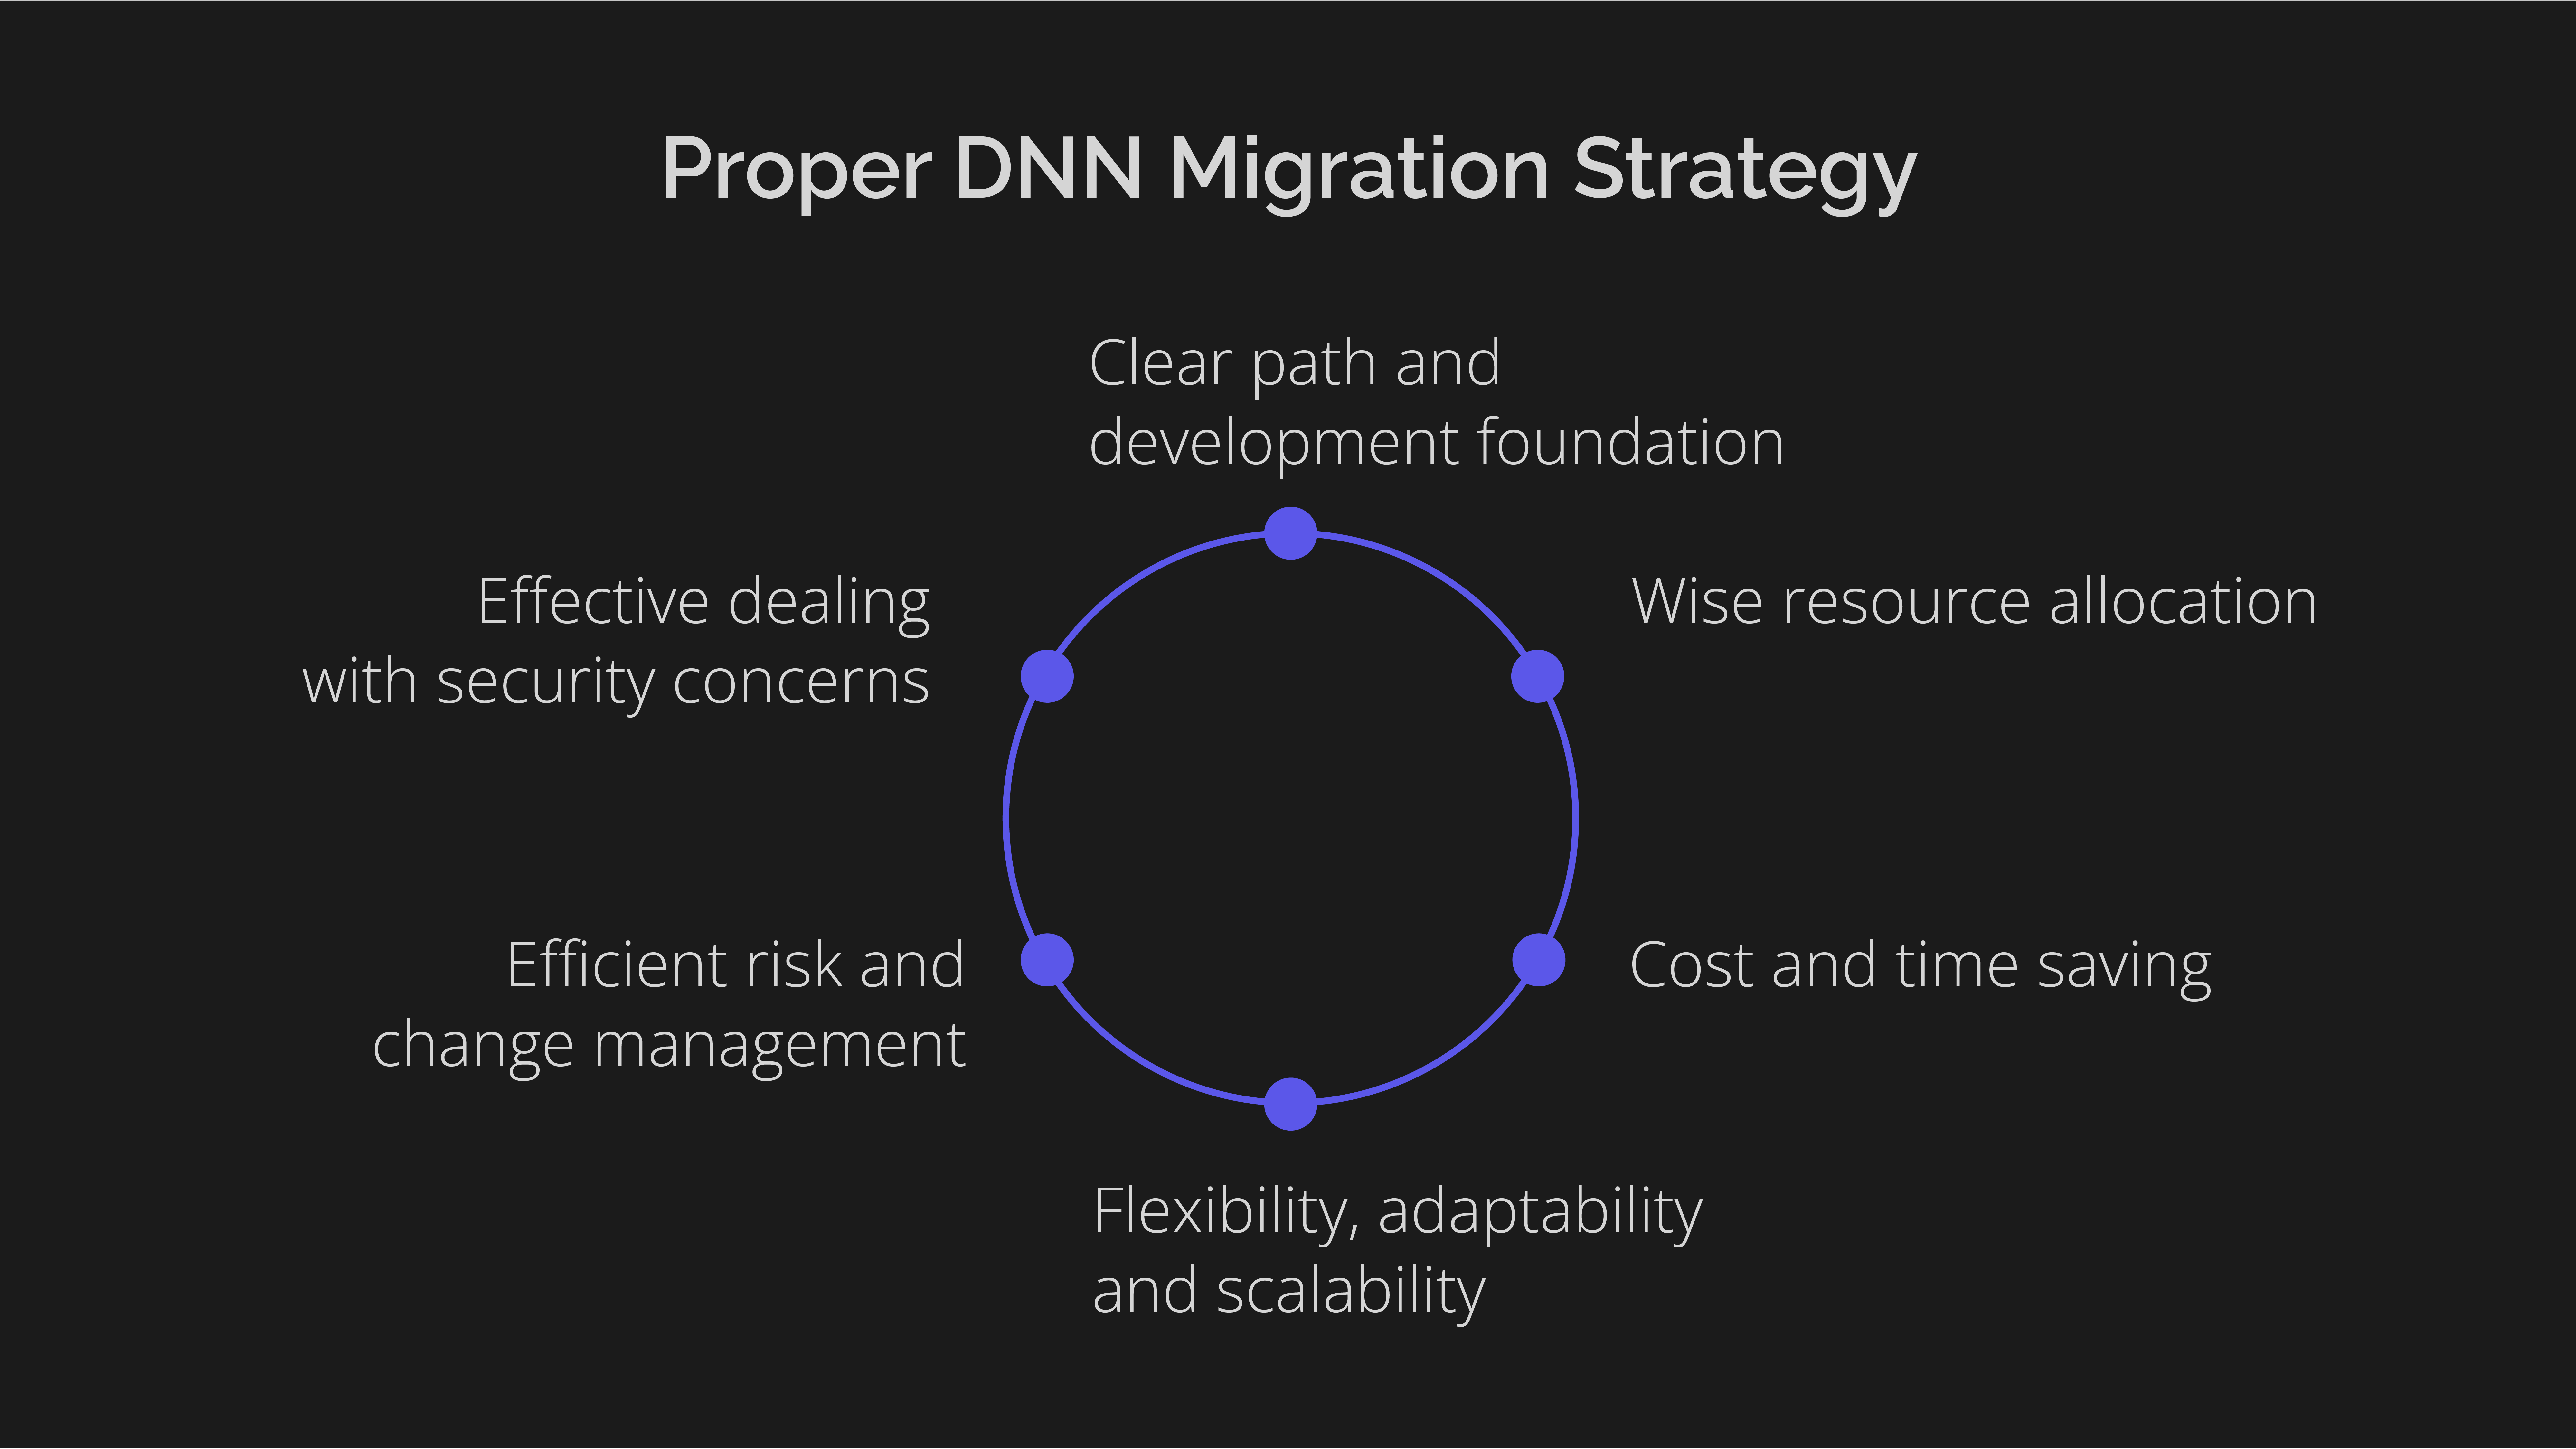 DNN_Migration_Proper DNN Migration Strategy.png